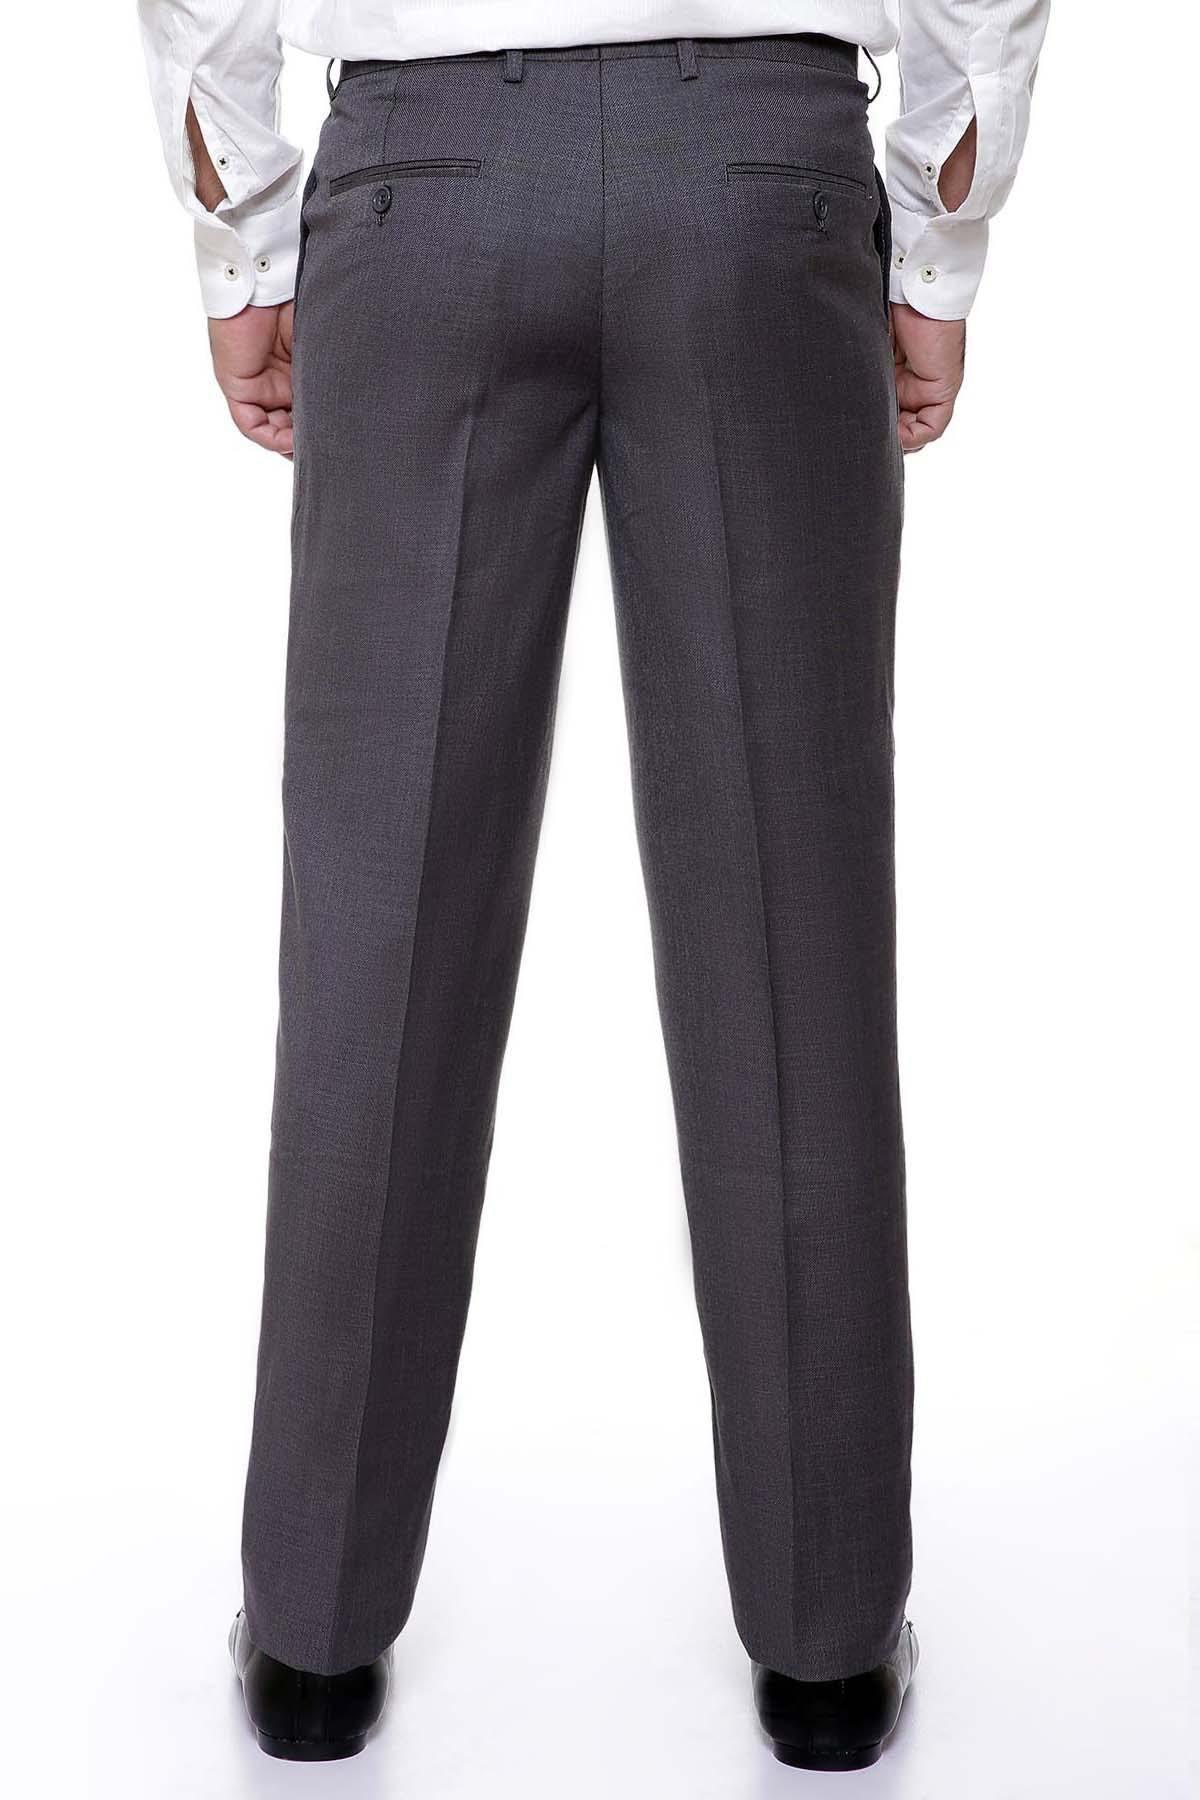 Dress Pant Smart fit Grey at Charcoal Clothing